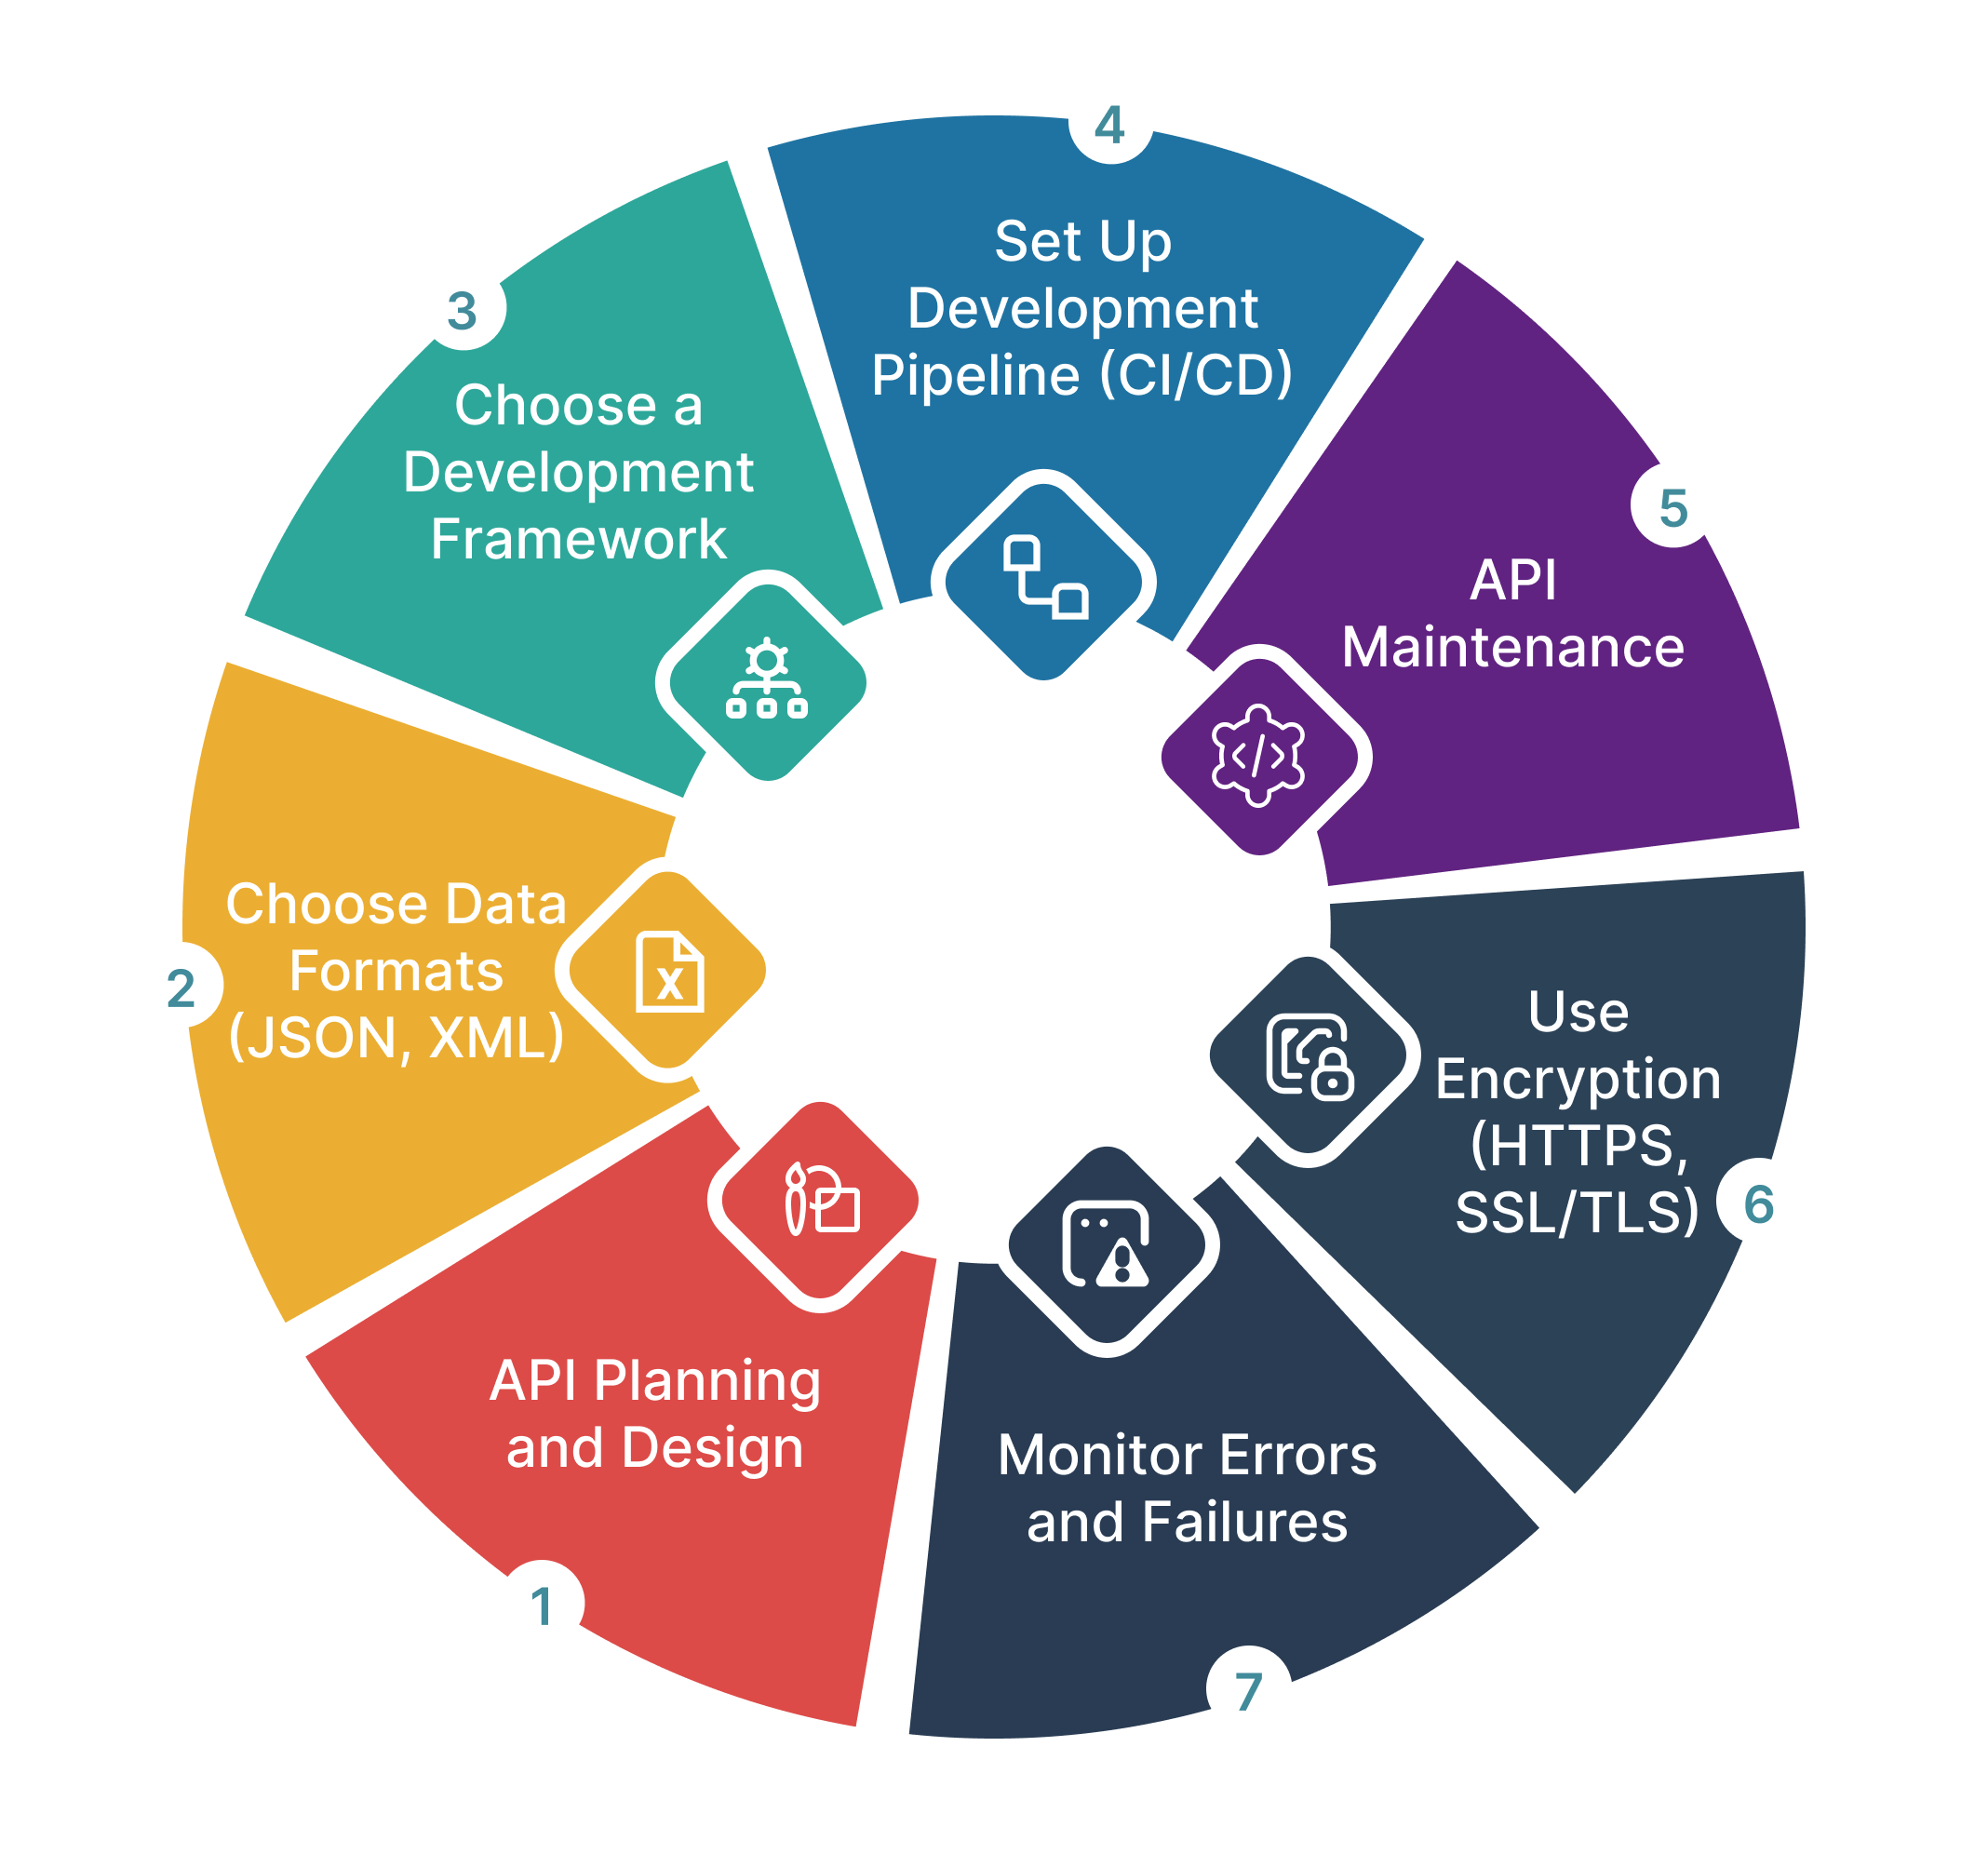 API integration services